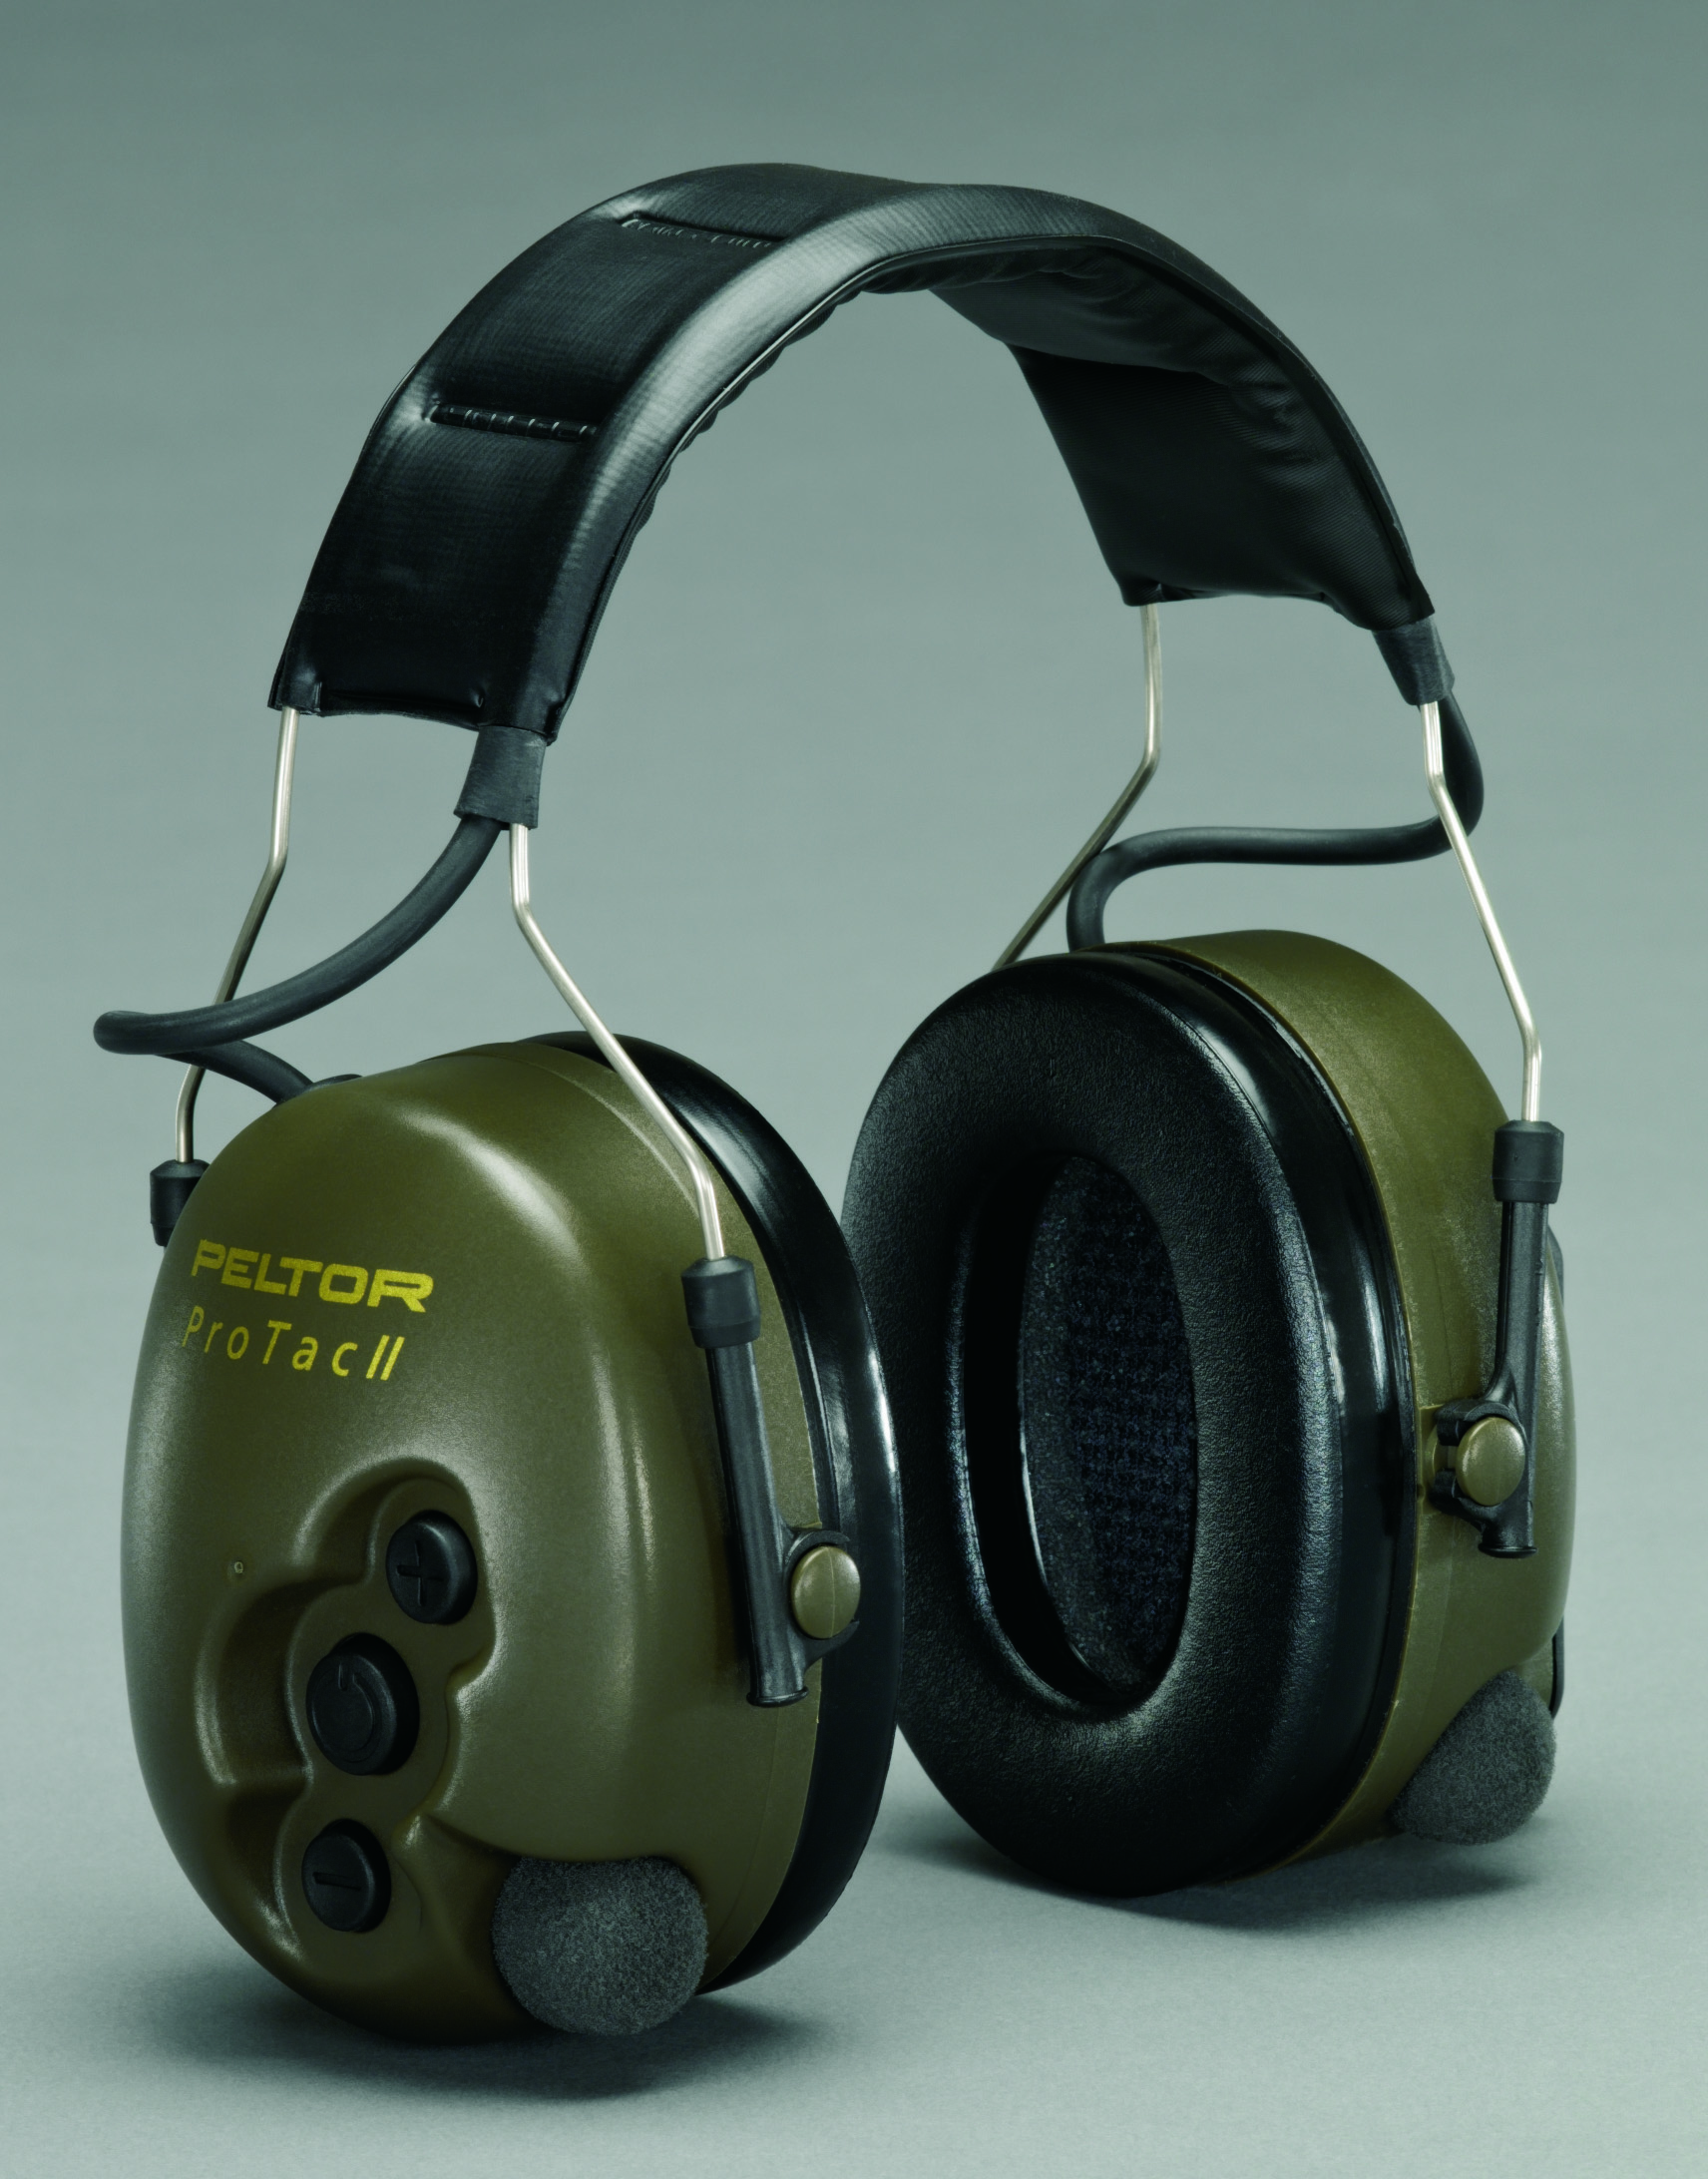 3M Peltor ProTac II Headset Black or Green Earshot Communications